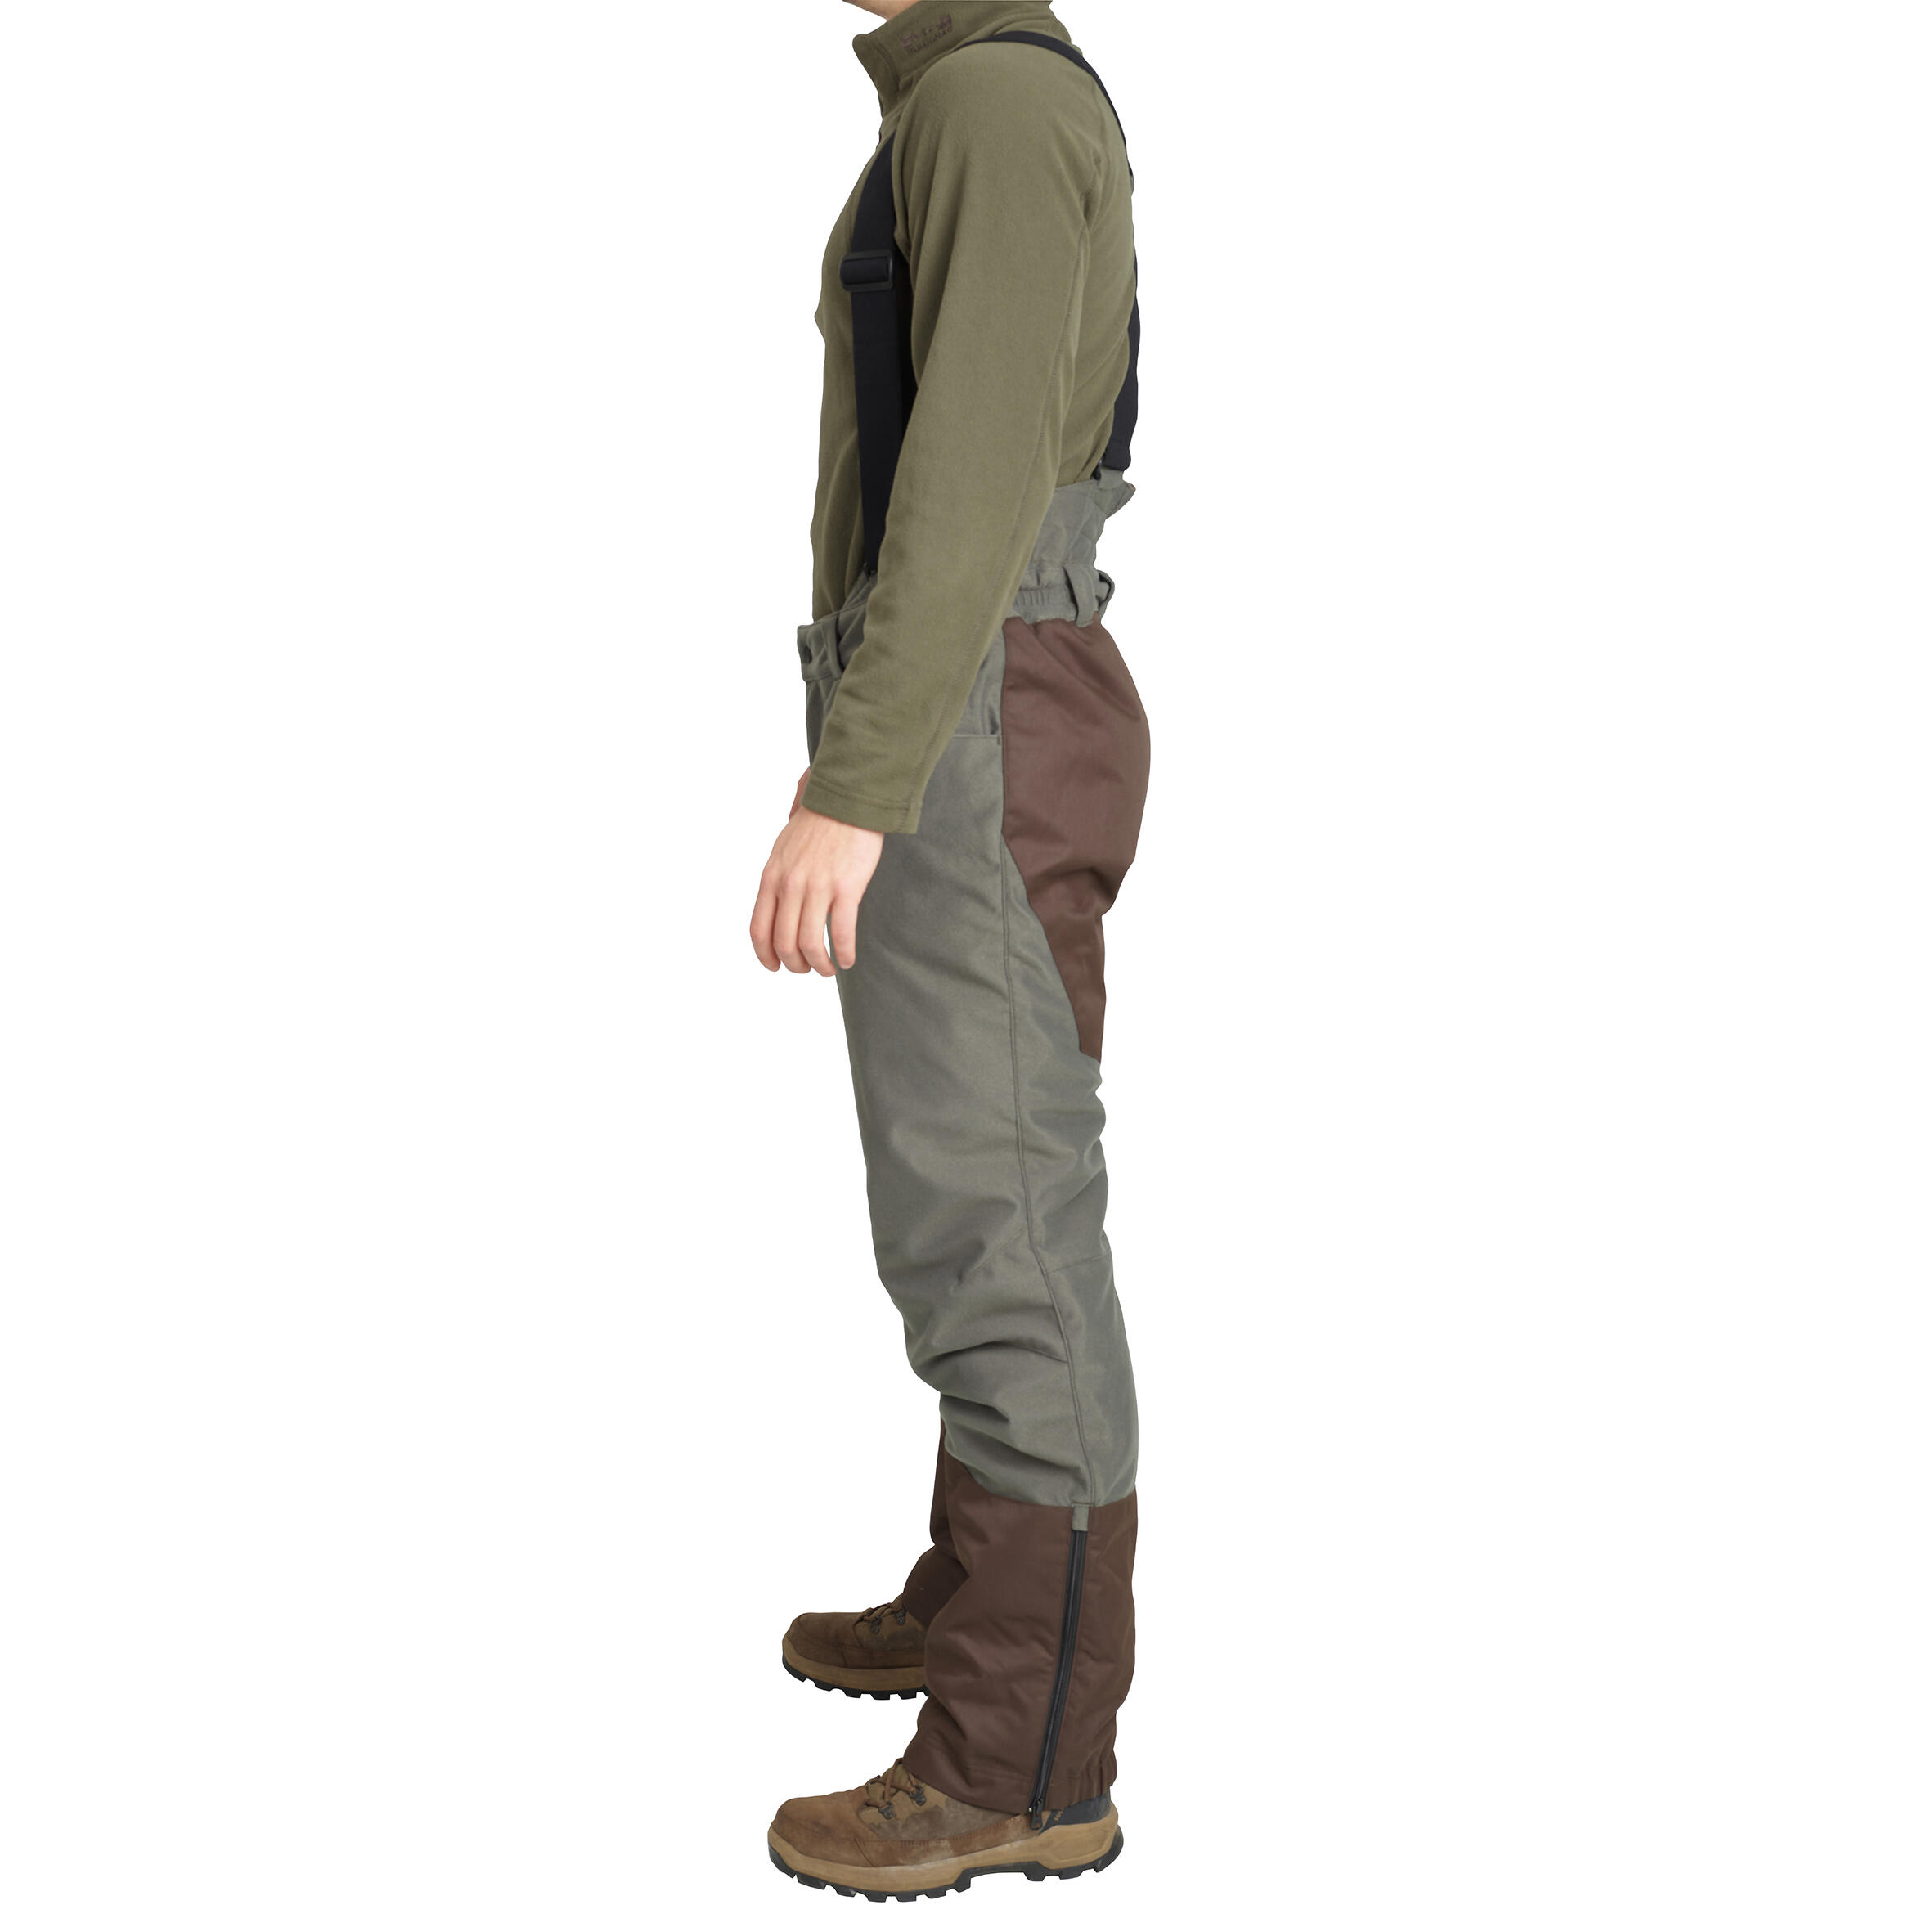 DECATHLON SOLOGNAC MENS Waterproof Camouflage Fleece Lined Trousers Hunting  XL £29.99 - PicClick UK